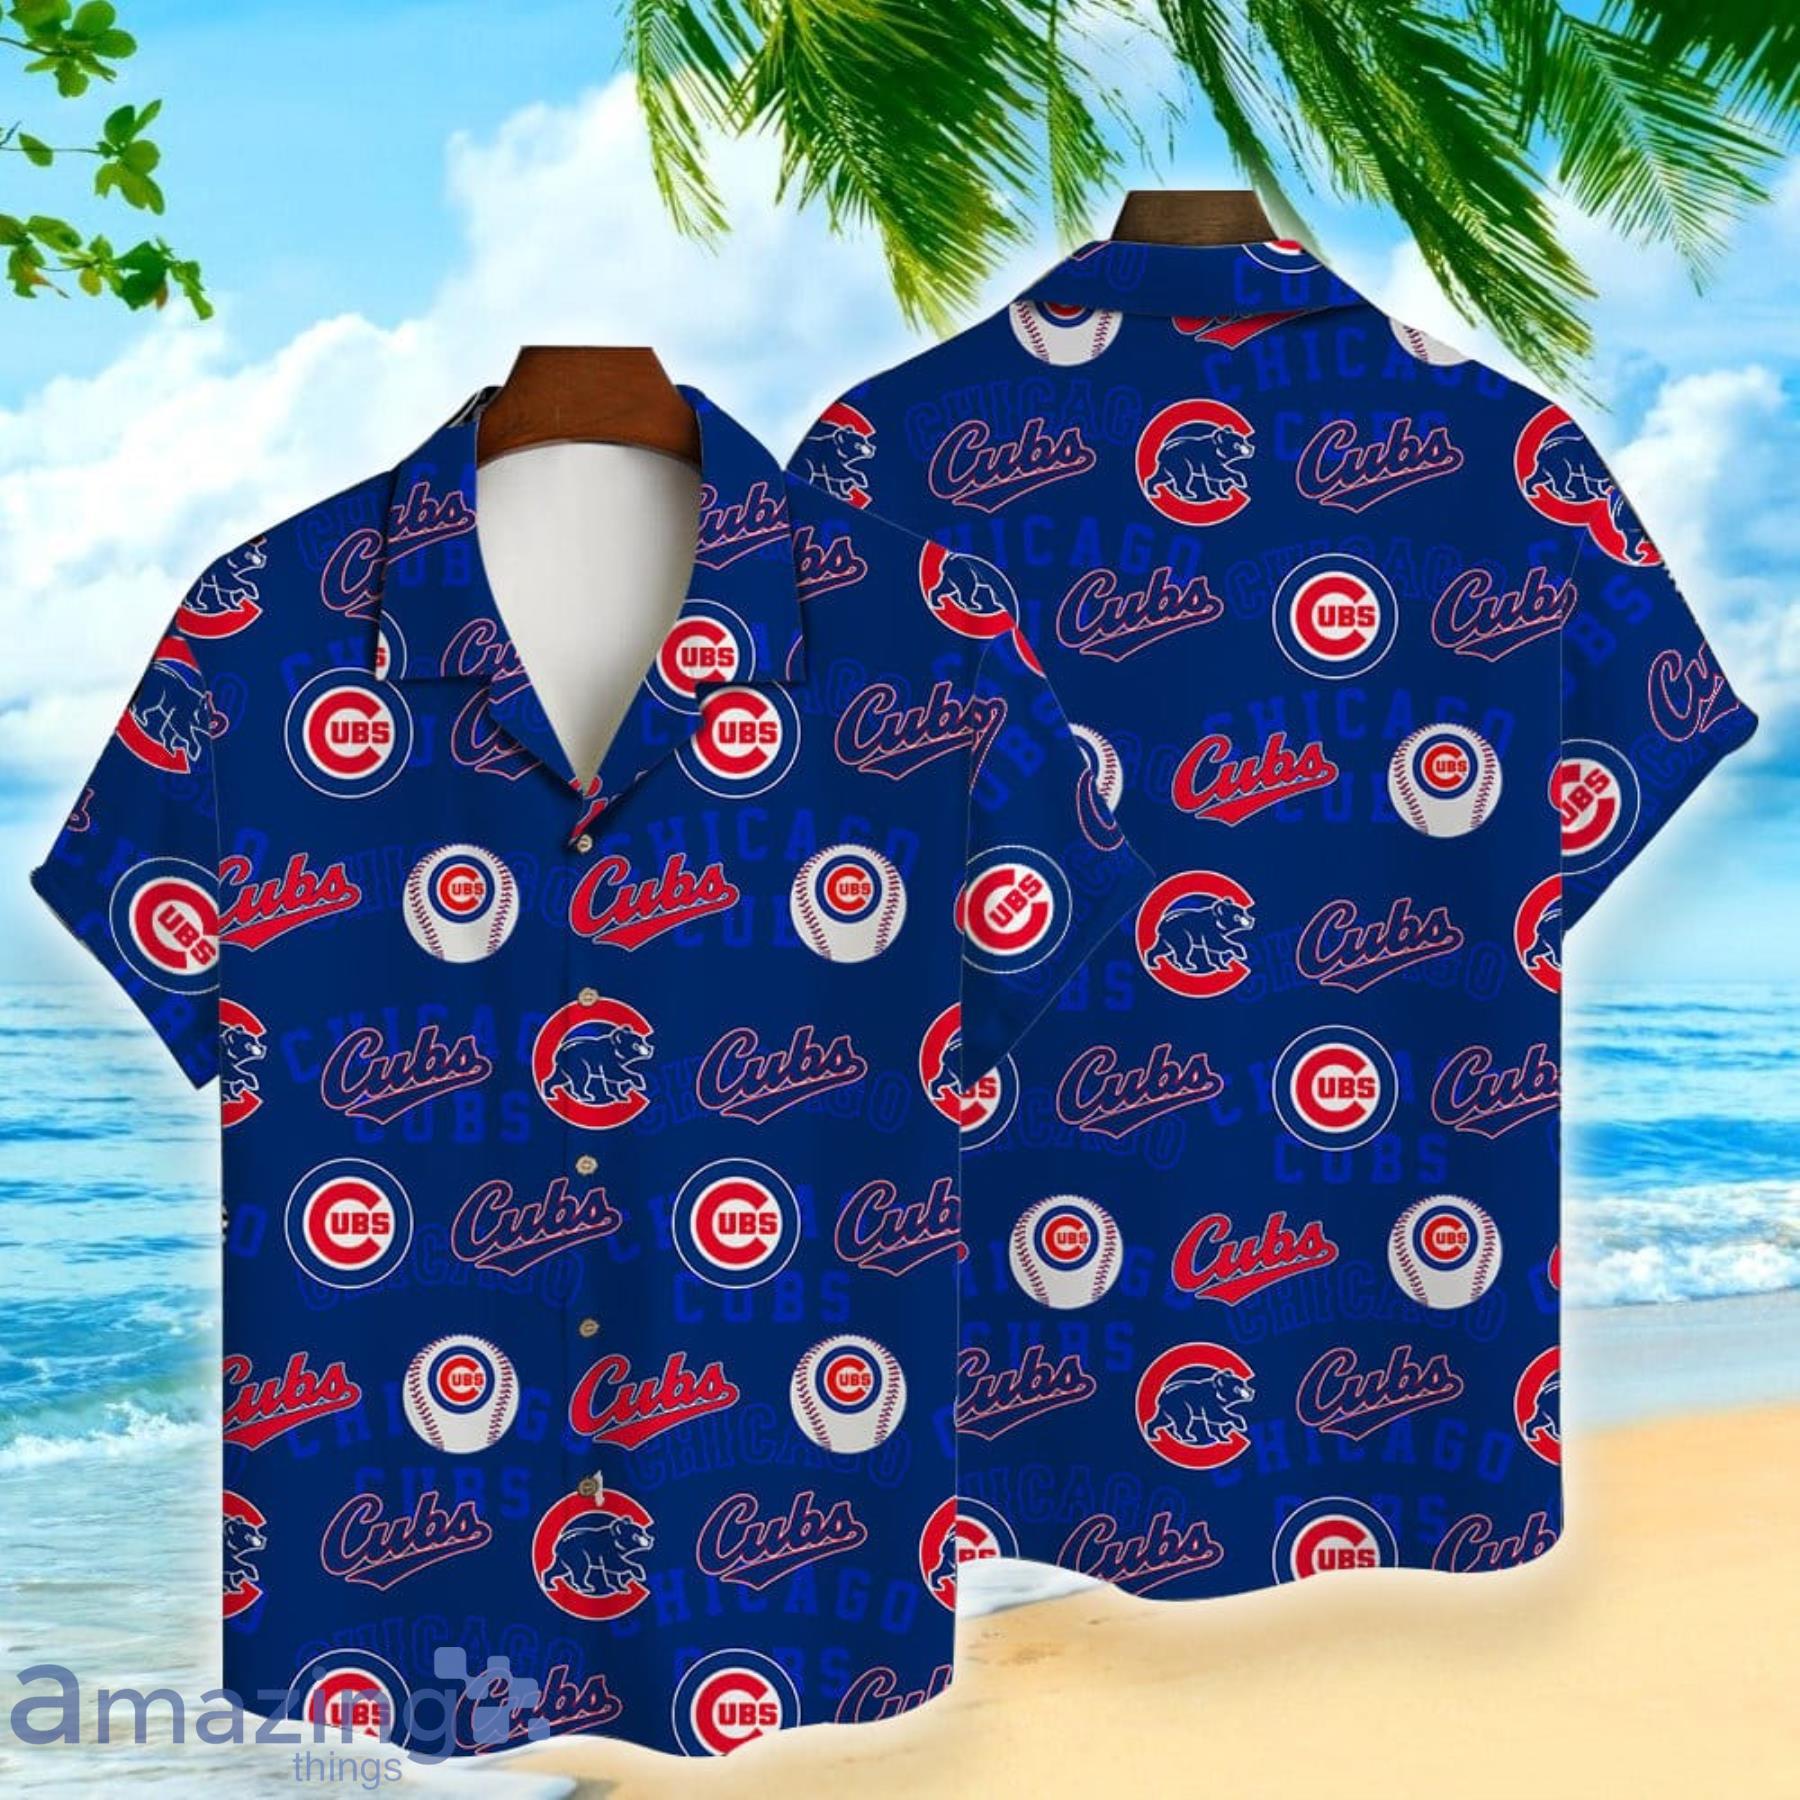 Chicago Cubs Major League Baseball 3D Print Hawaiian Shirt For Fans -  Freedomdesign